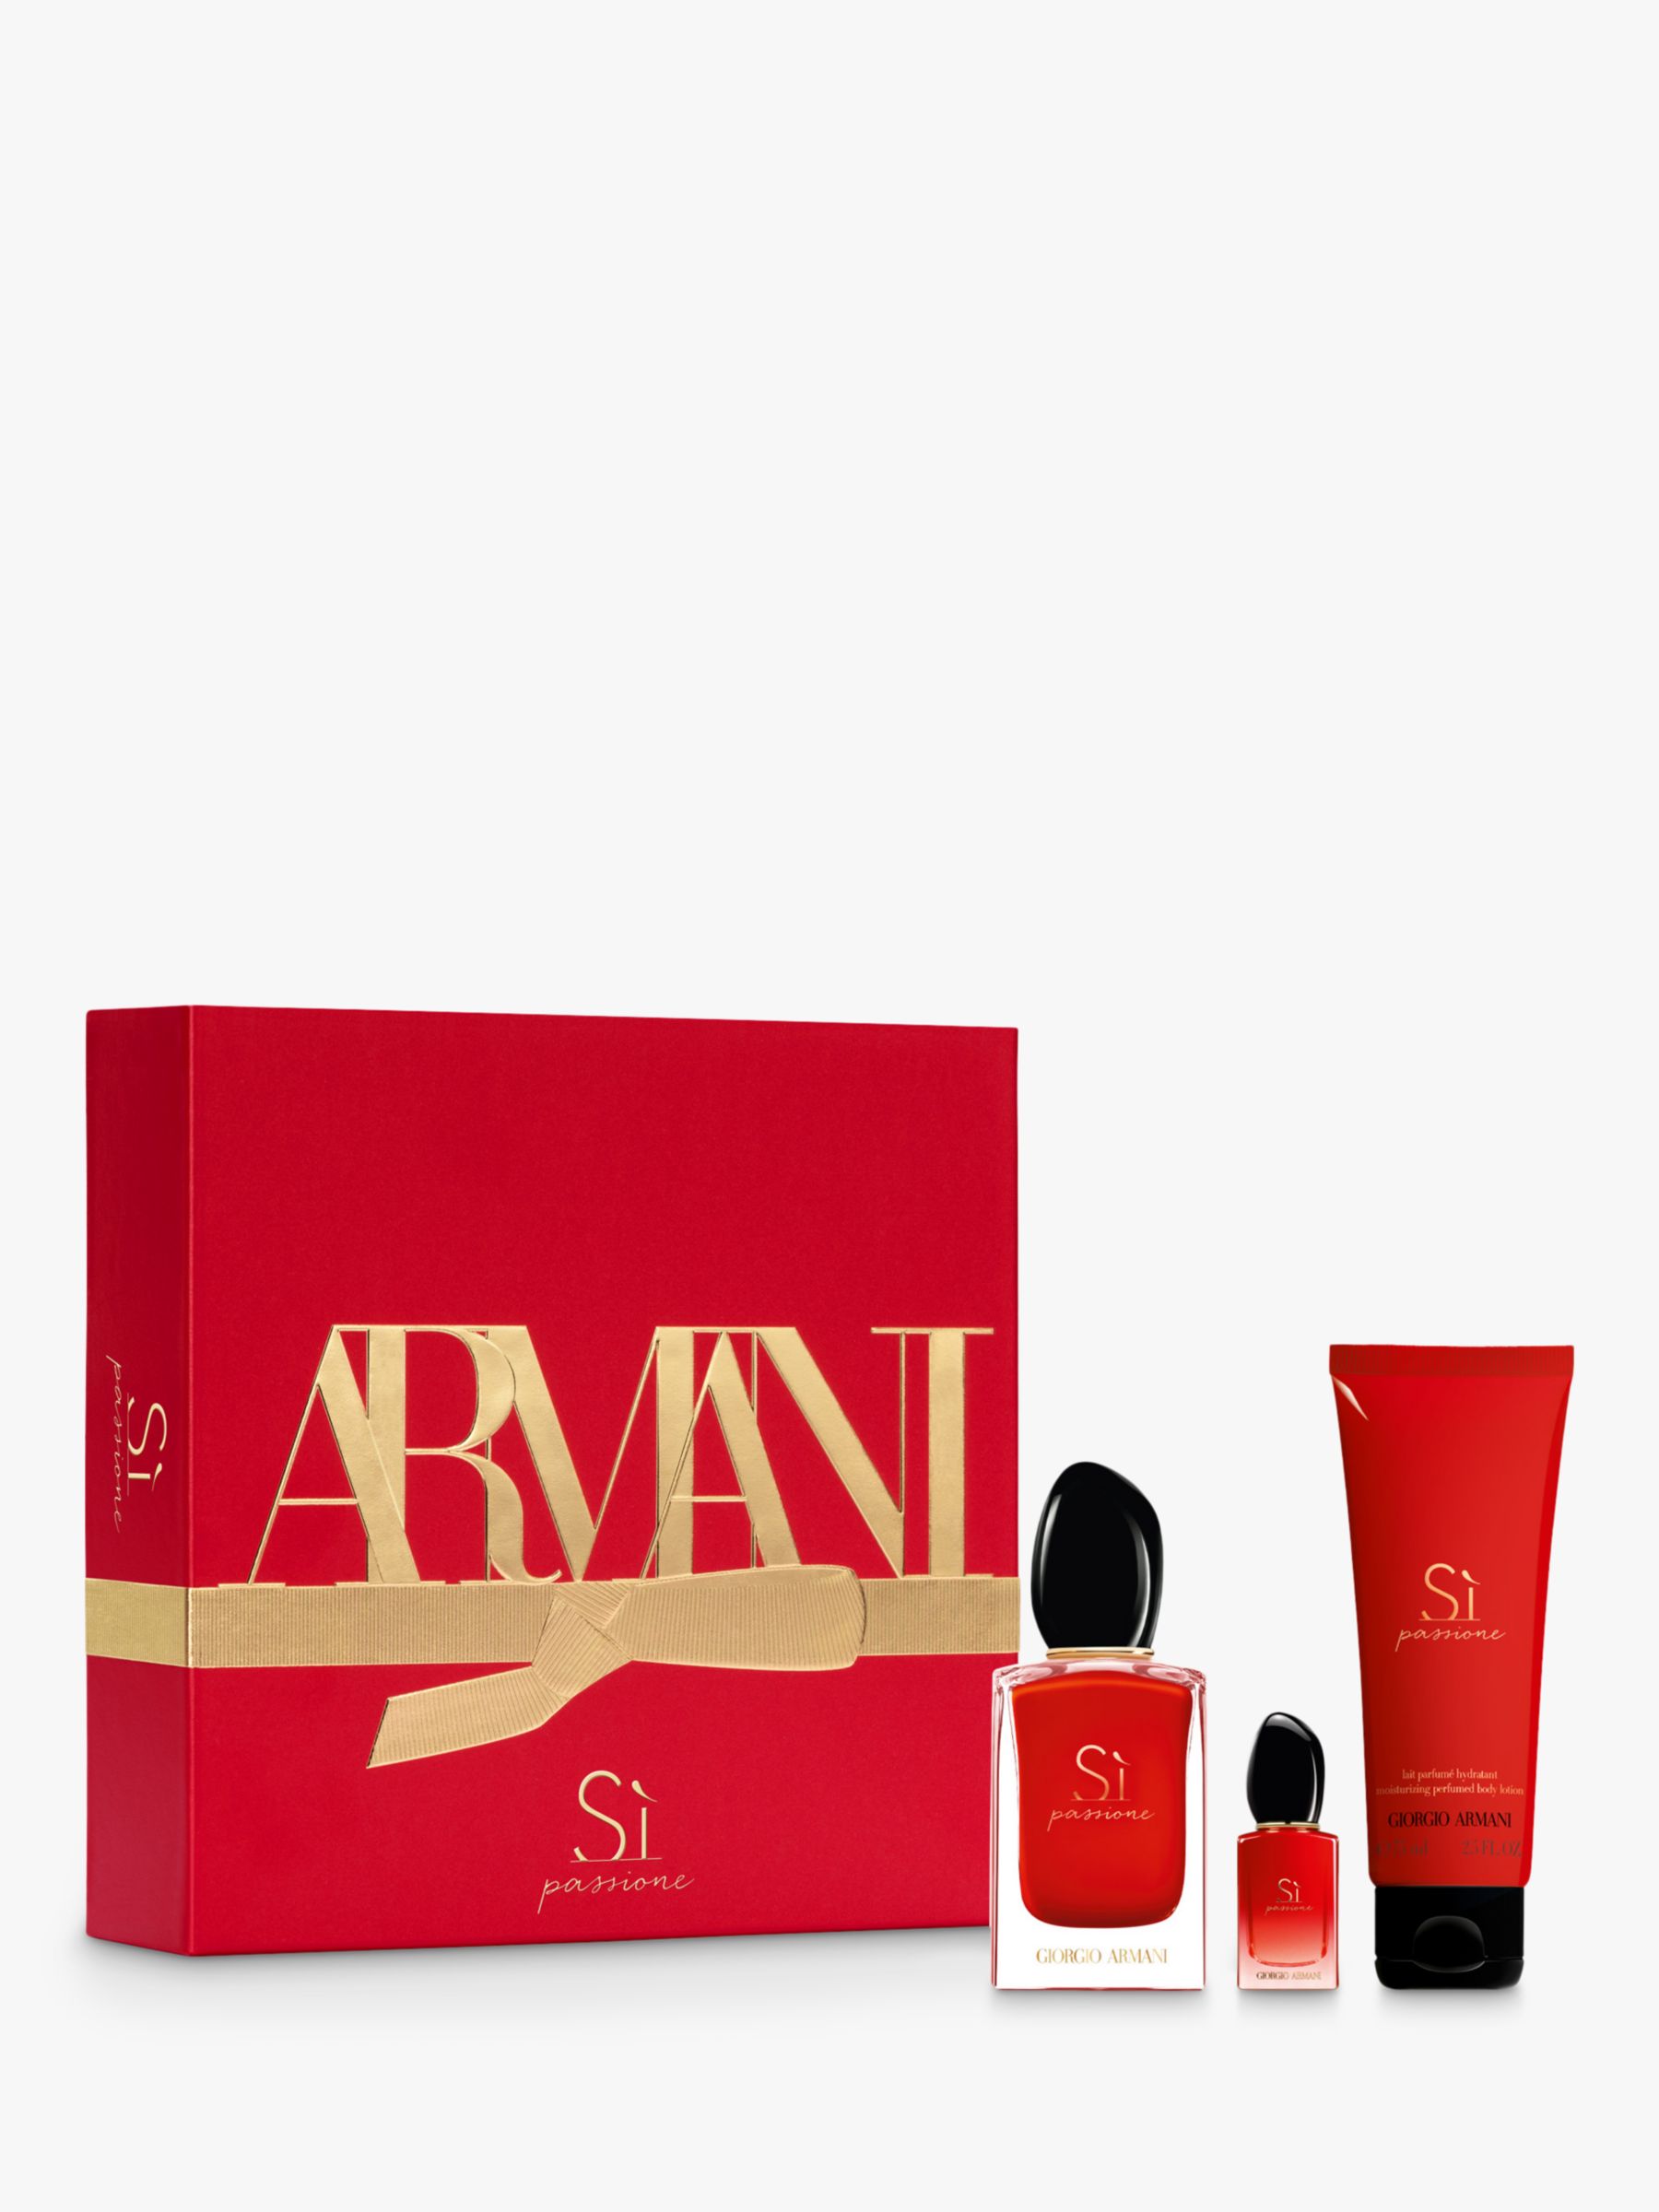 Giorgio Armani Sì Passione Eau de Parfum 50ml Fragrance Gift Set